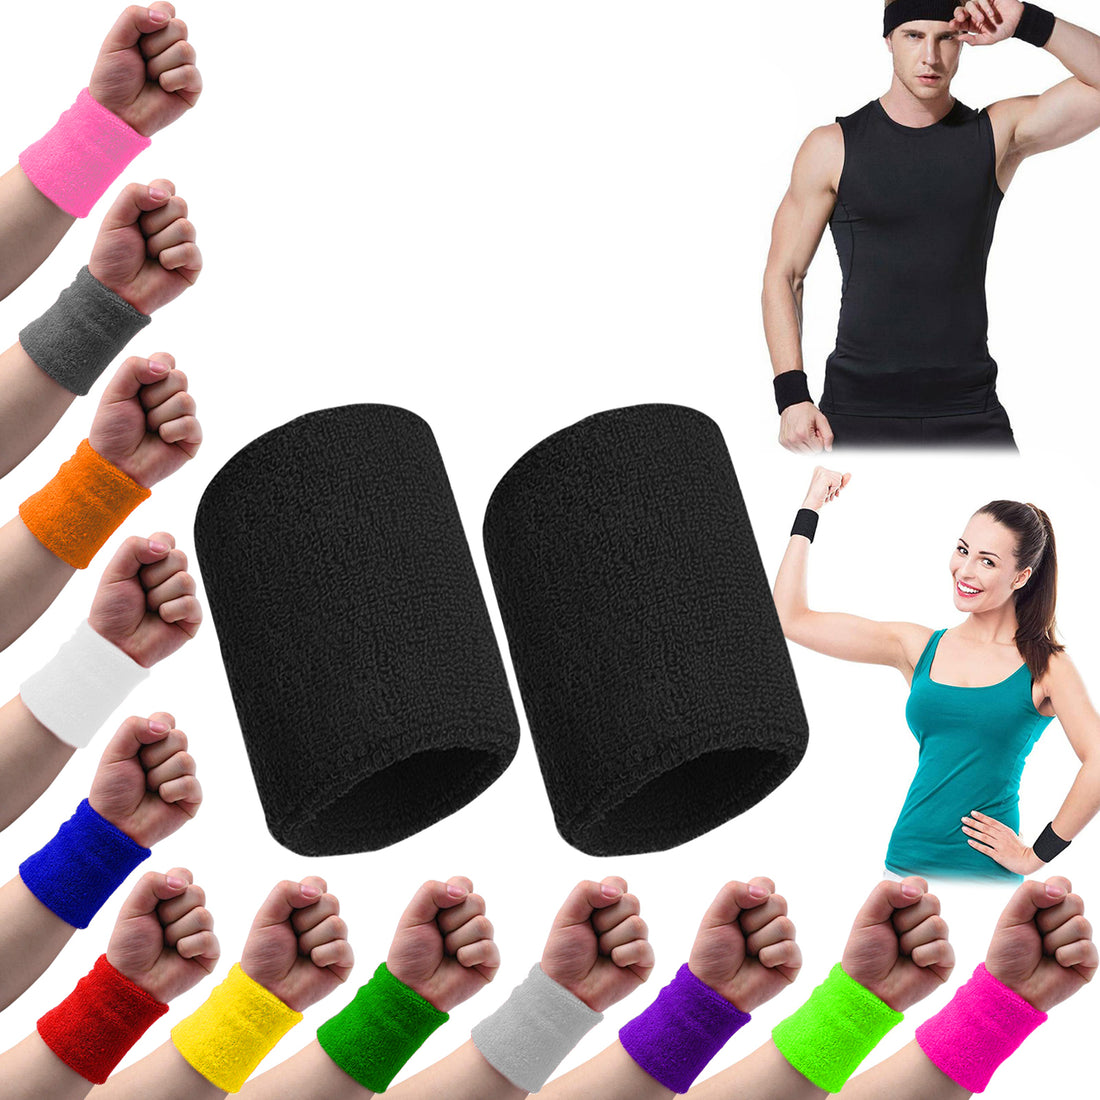 Sports Wrist Sweat Bands Handbands Unisex 80s Fitness Wool Sweatbands Gym Tennis